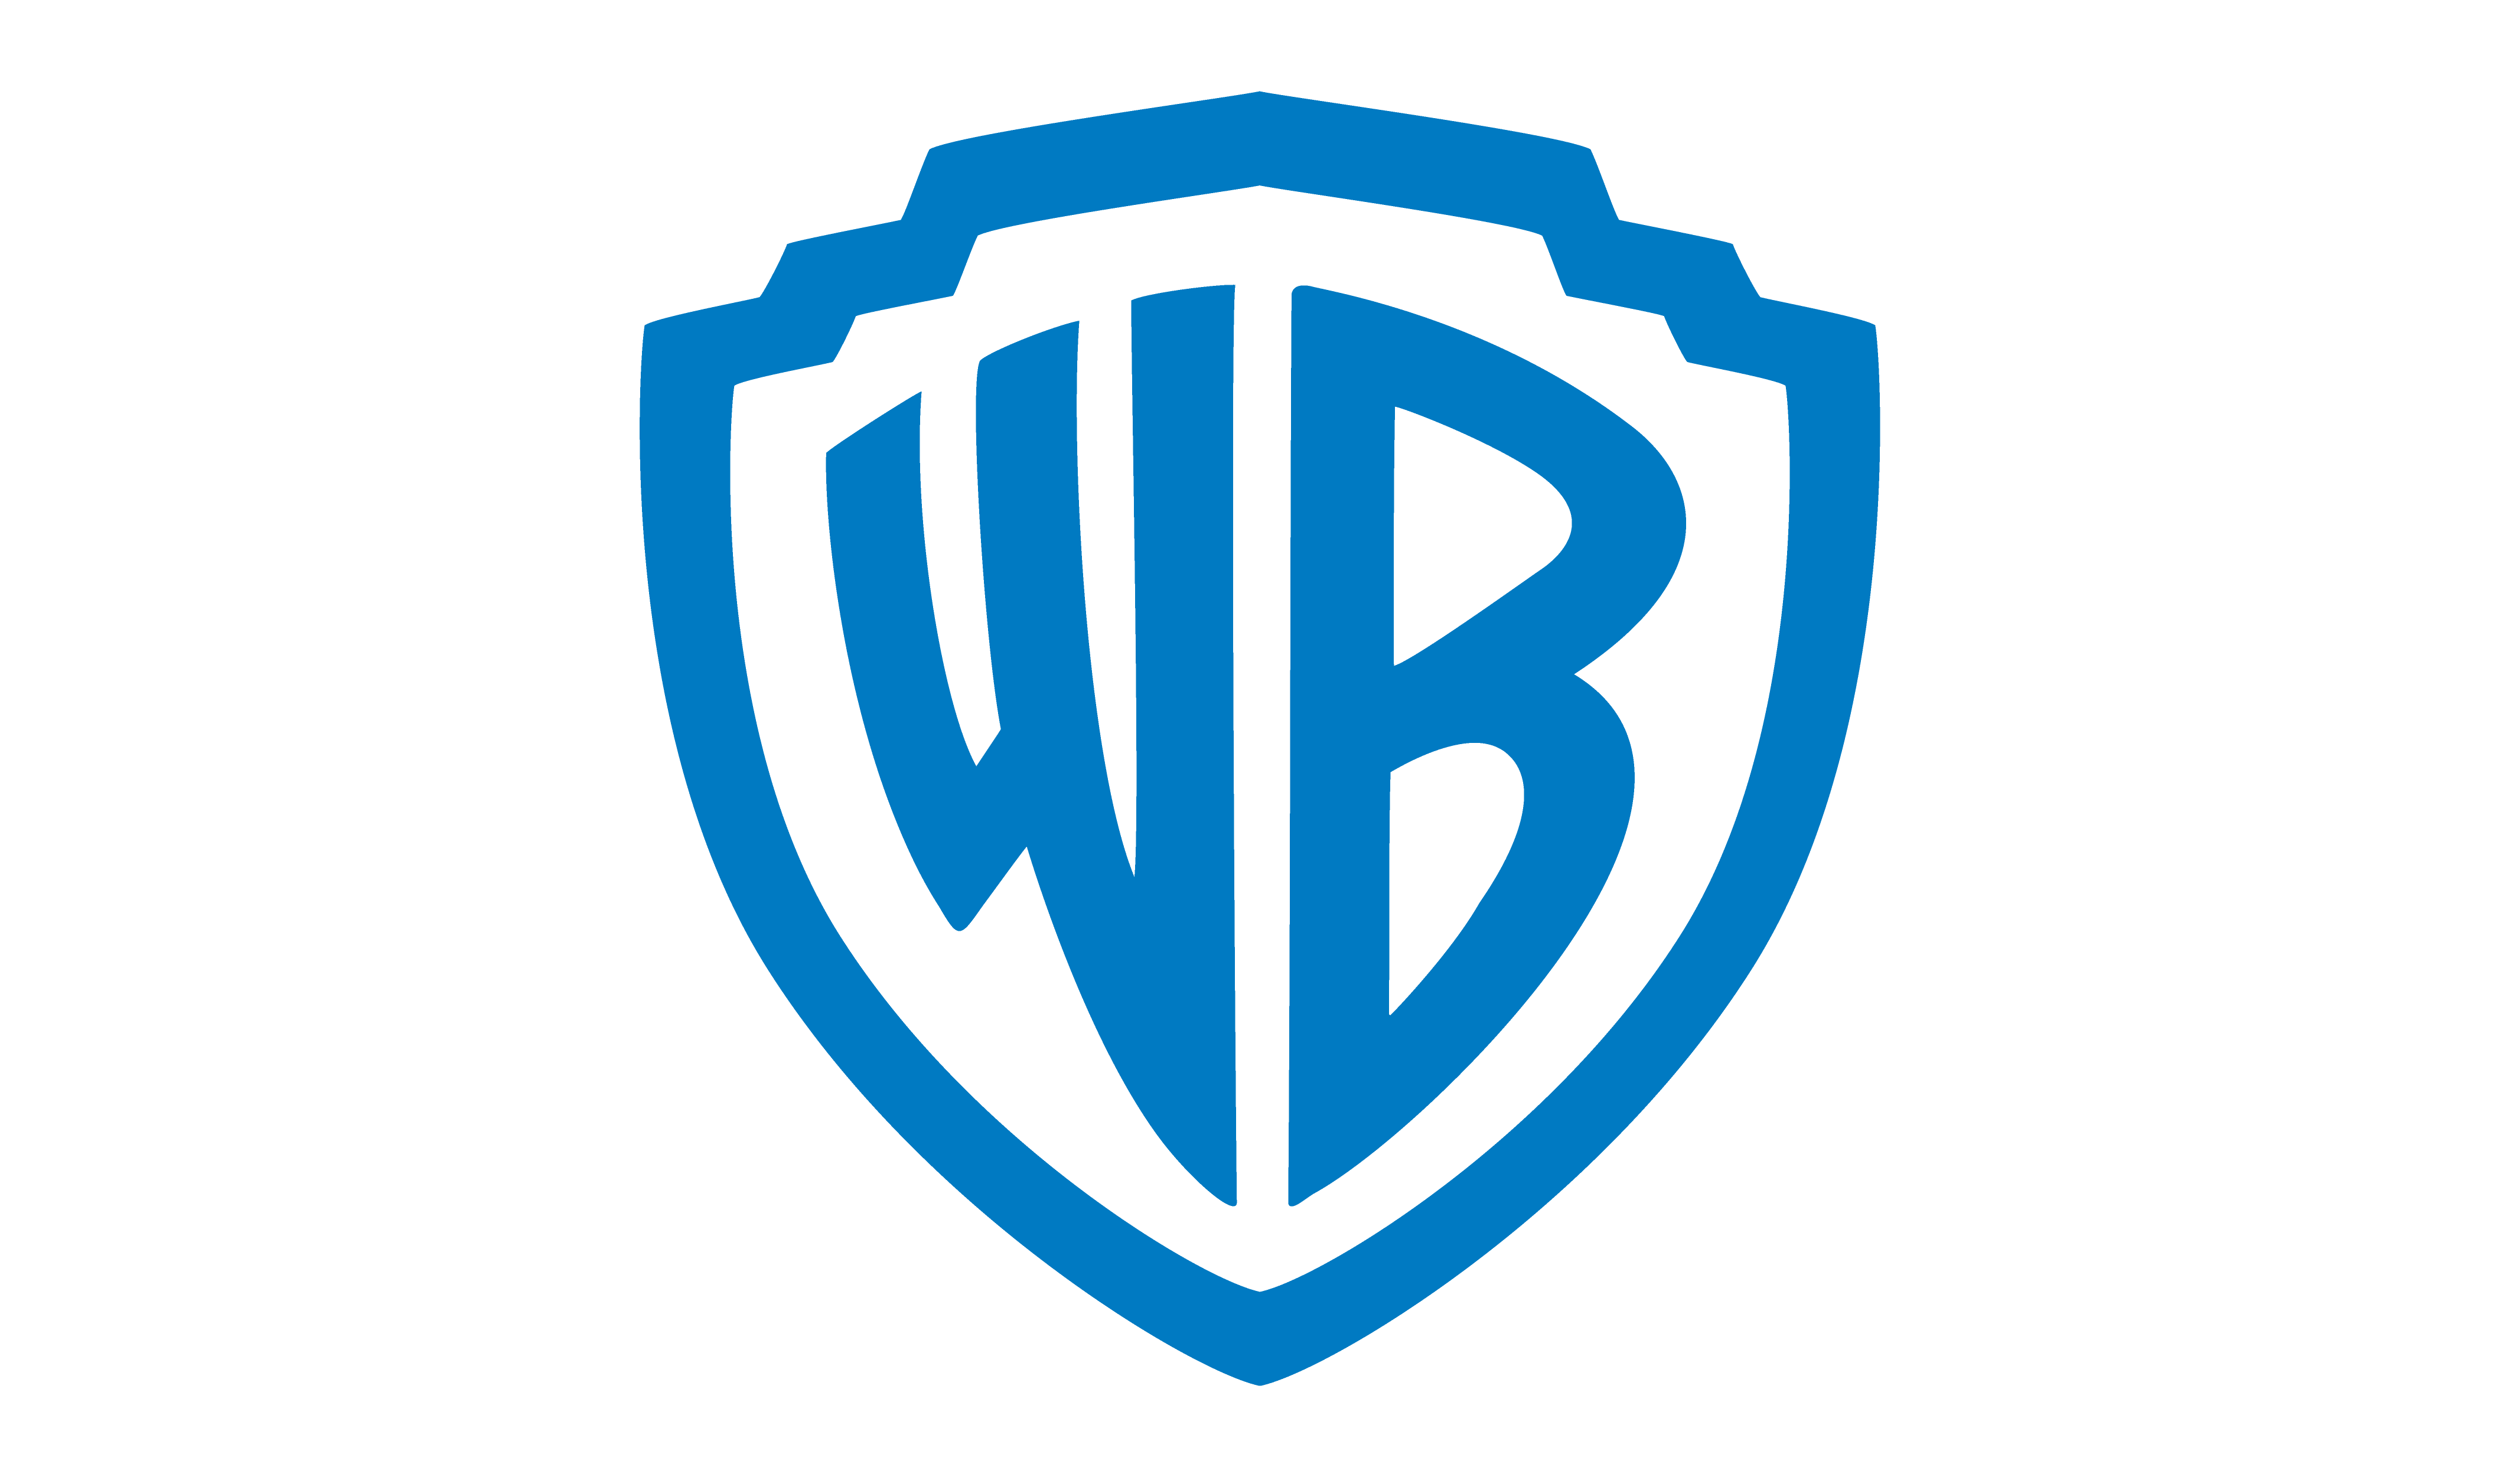 Warner Bros. Logo